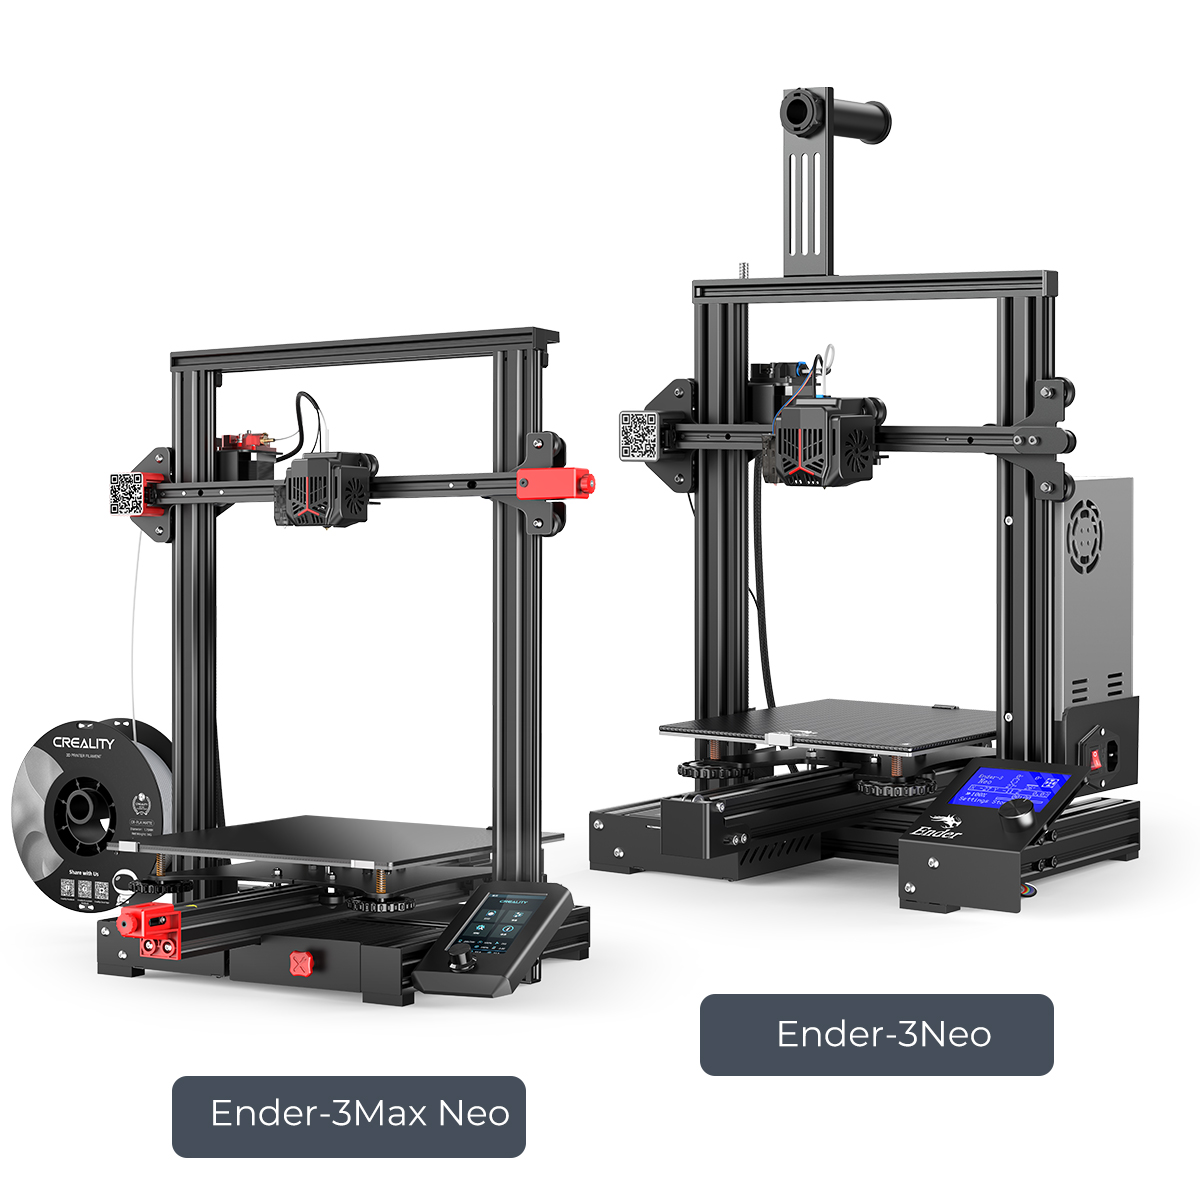 Creality Ender-3Neo, Ender-3Max Neo 3D Printer